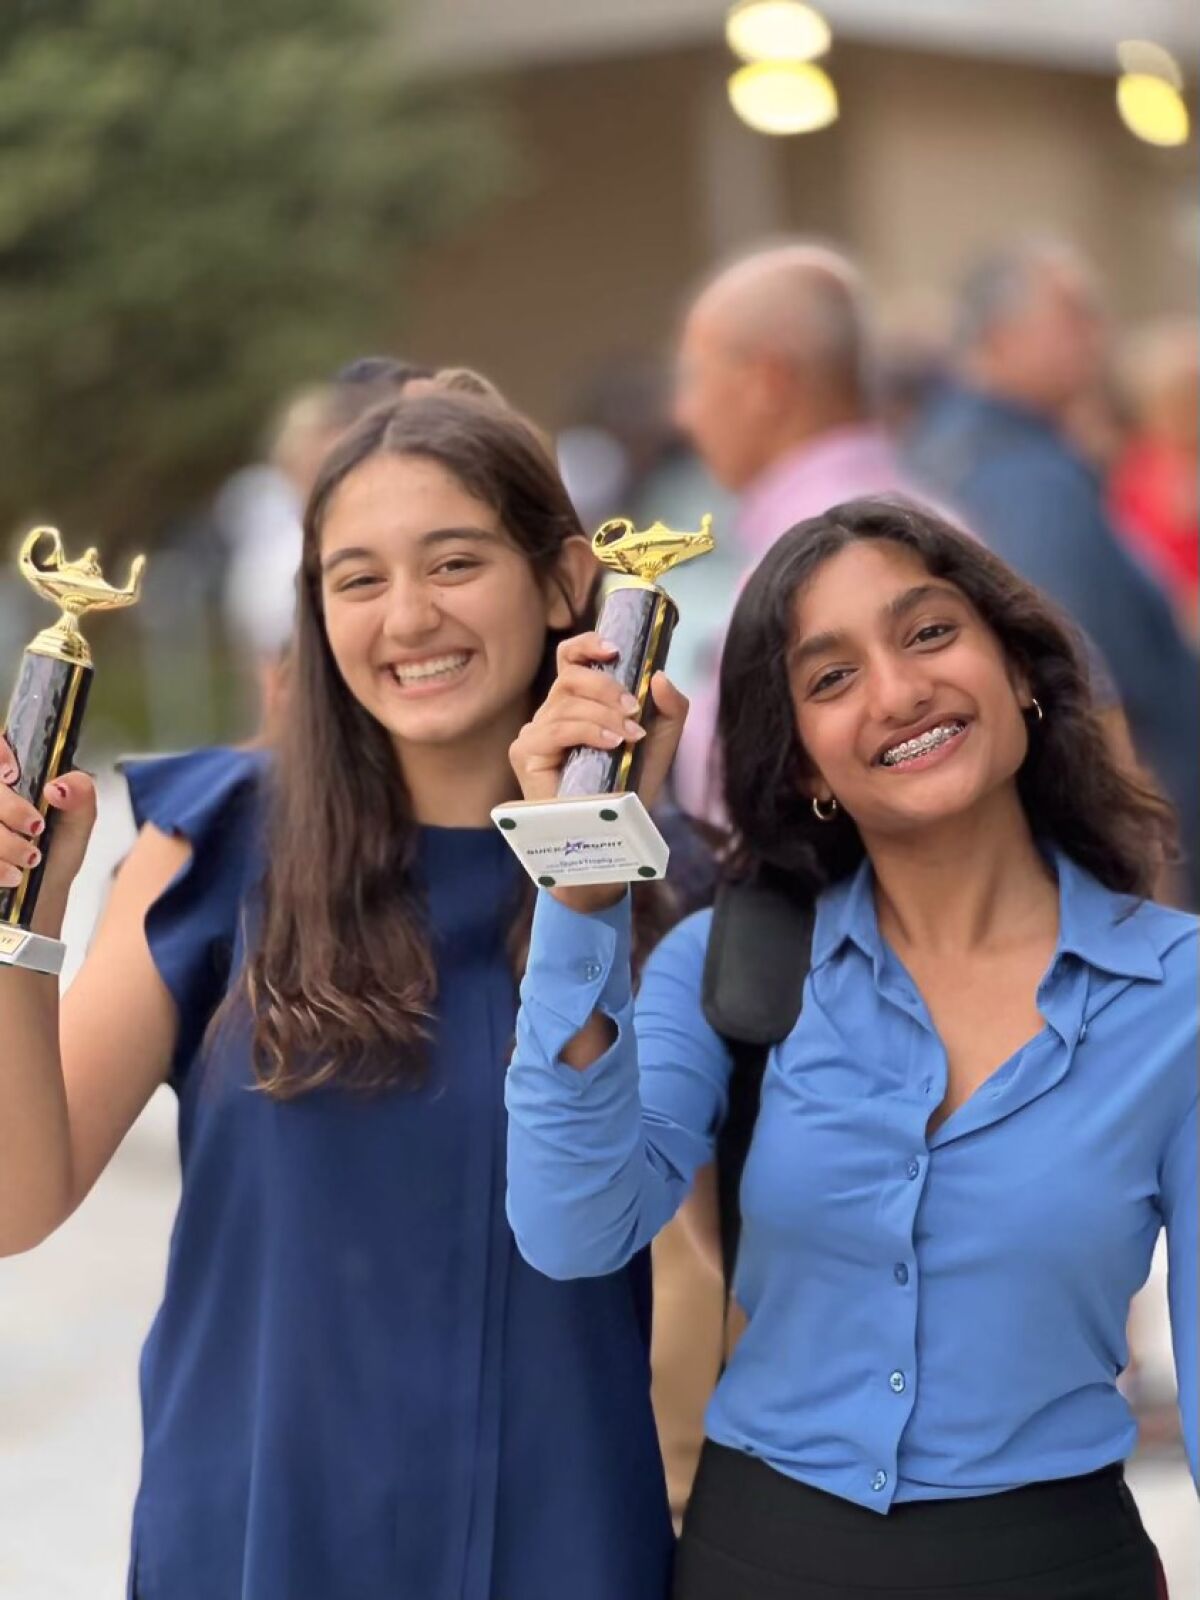 Sofia Inamdar (left) and Aria Khaitan (right) with their awards.